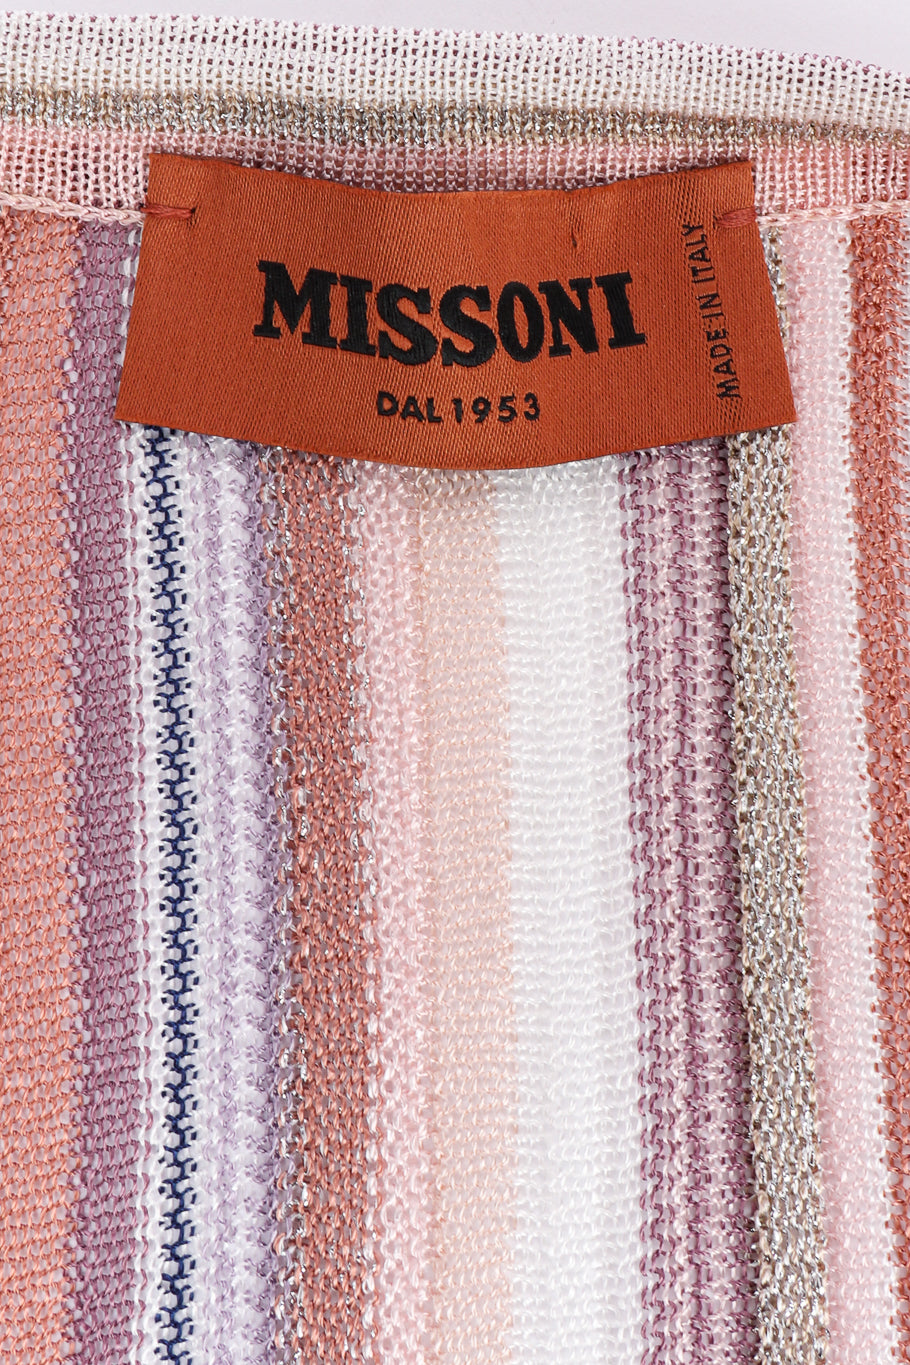 Missoni Striped Knit Duster, Tank, and Pants Set duster signature label closeup @Recessla